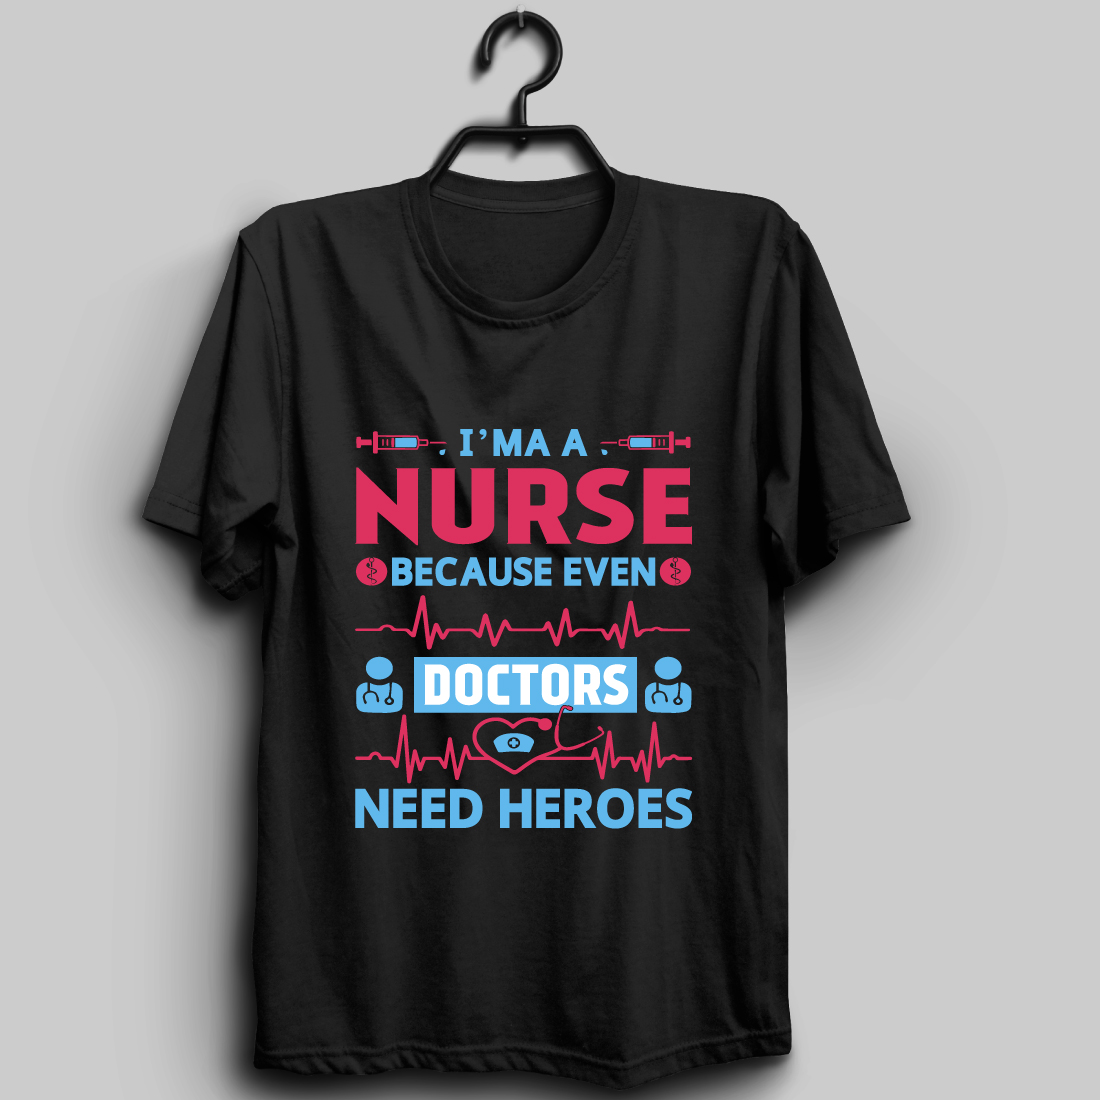 nurse t shirt design 05 400